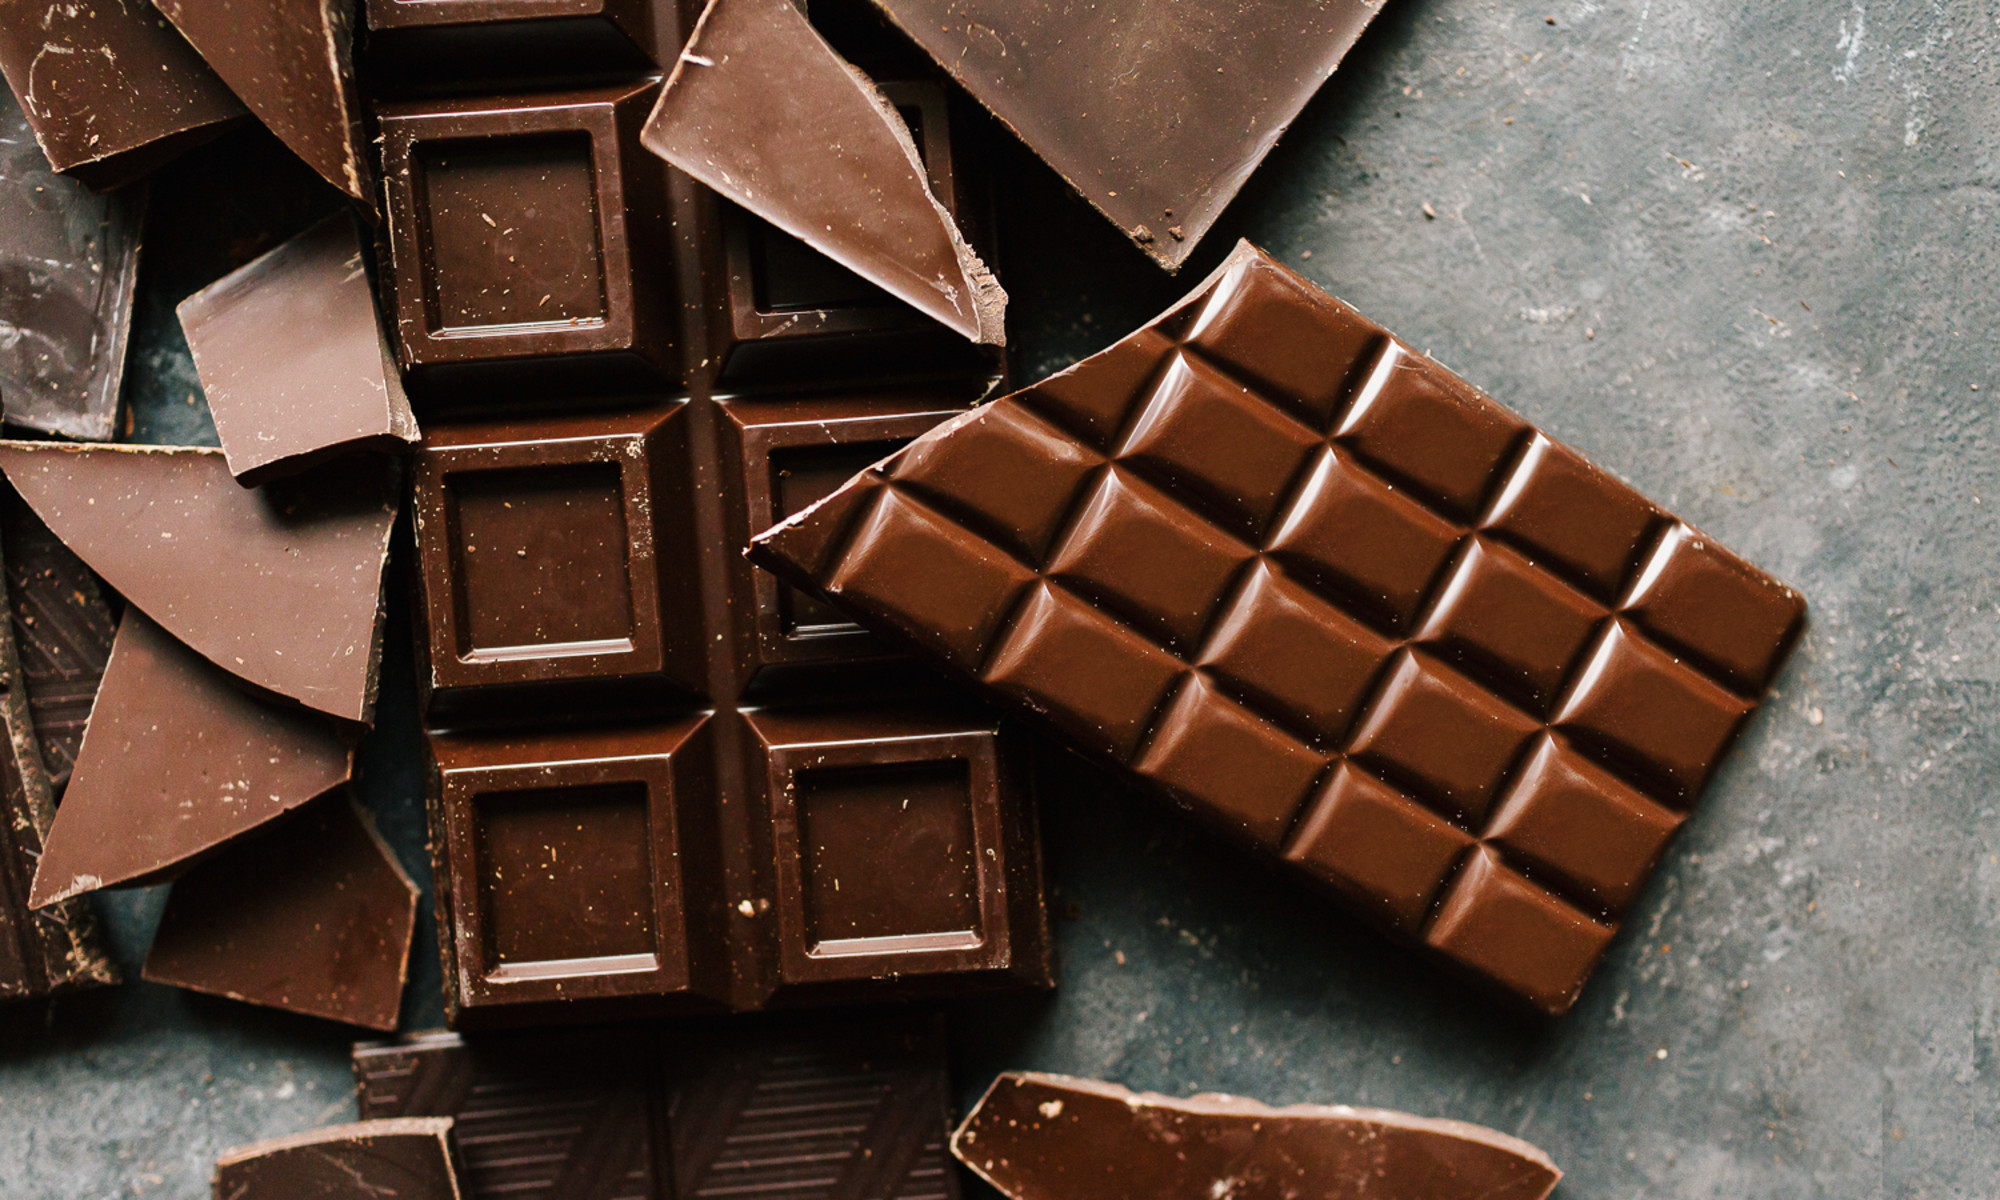 Видео с шоколадкой. Шоколад белый против чёрного. Chocolate pattern. შოკოლადი photo.